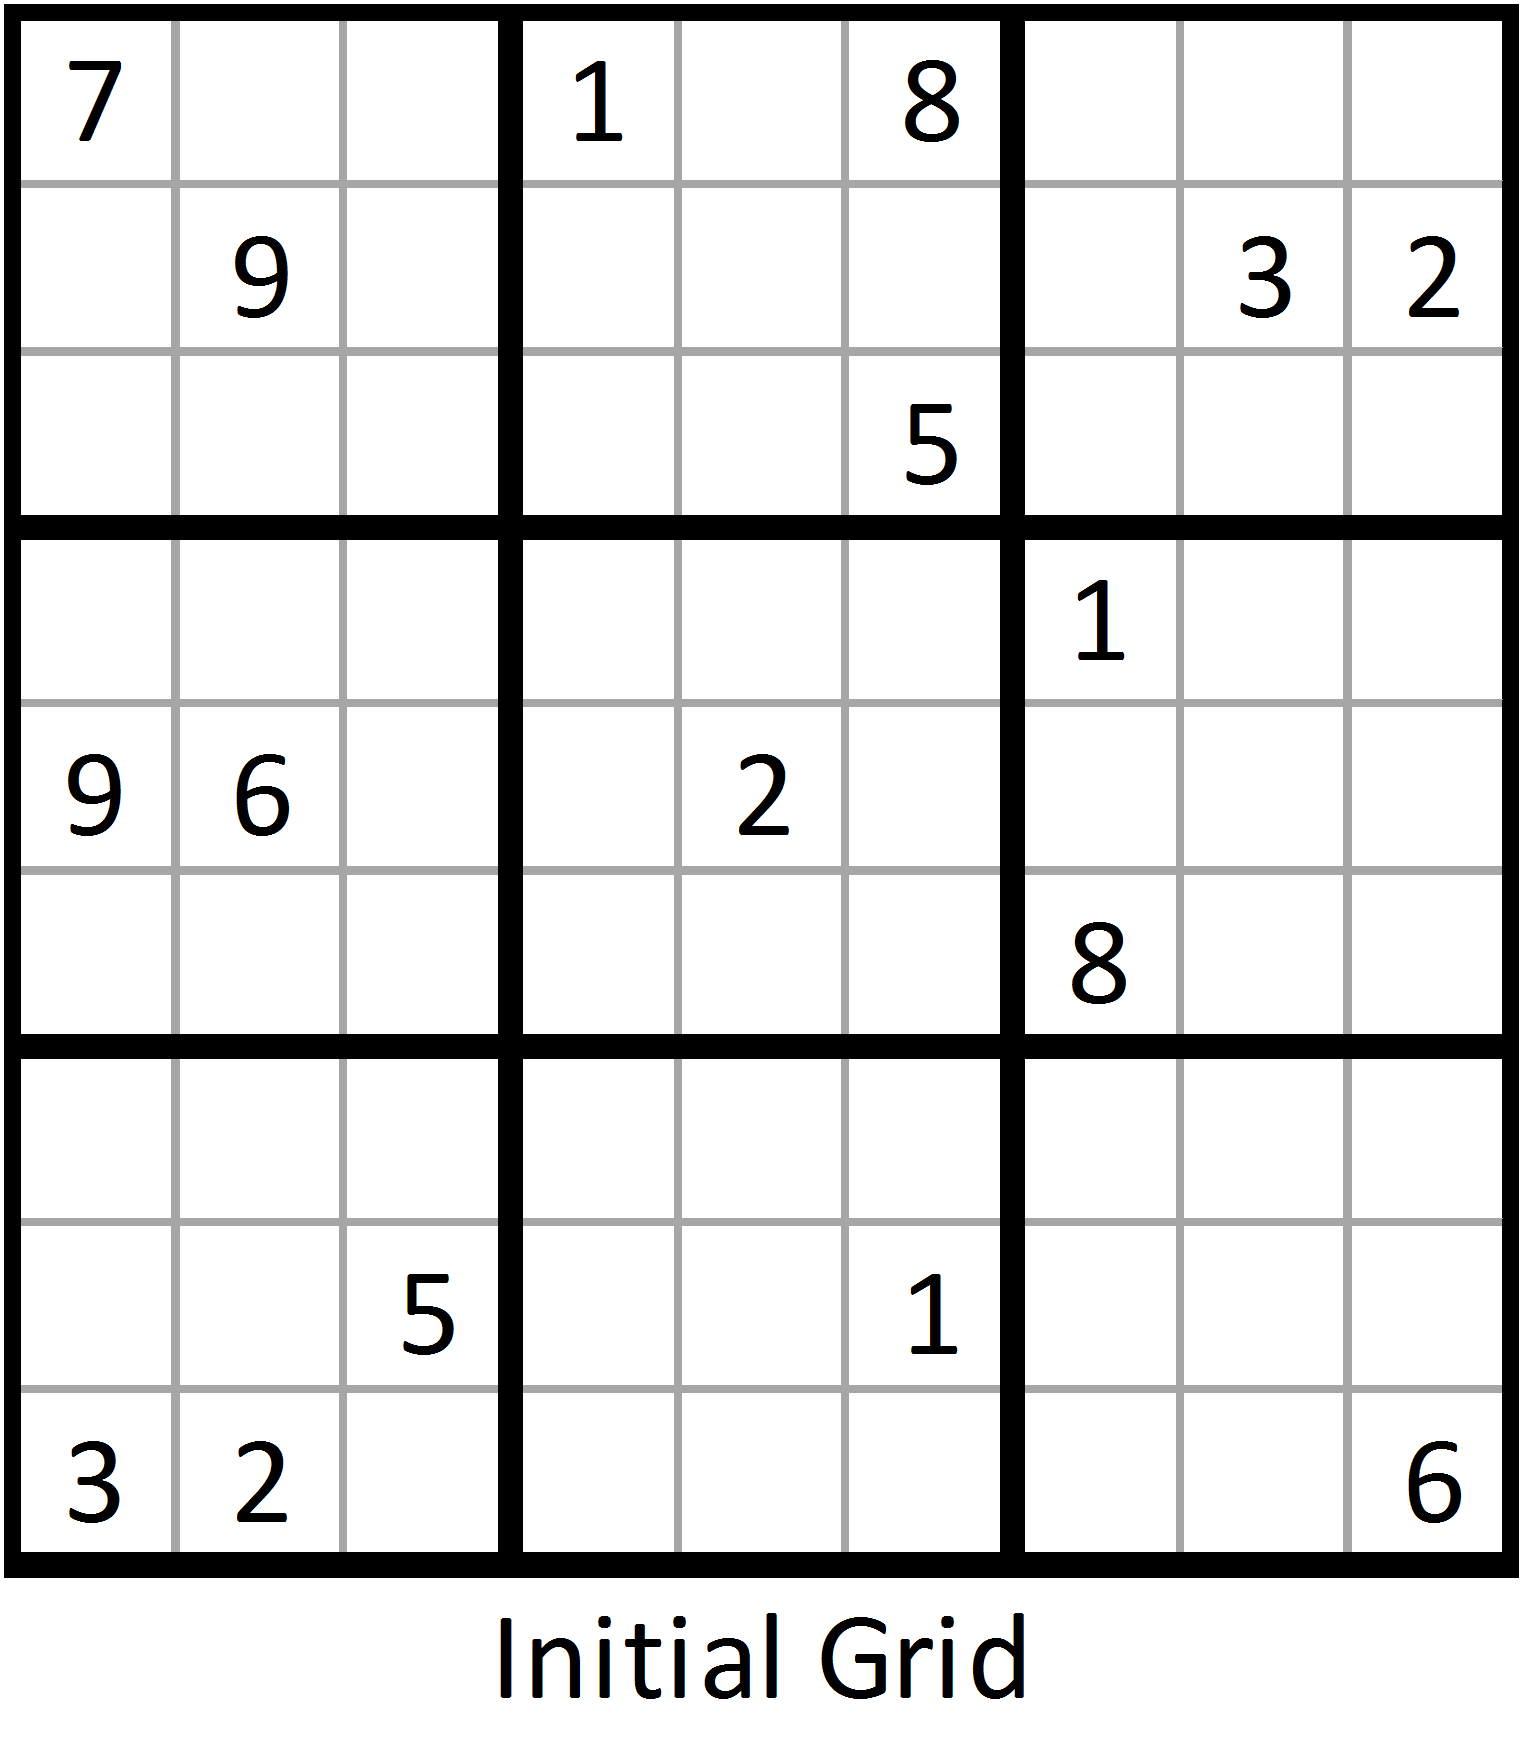 A Simple Sudoku Solver